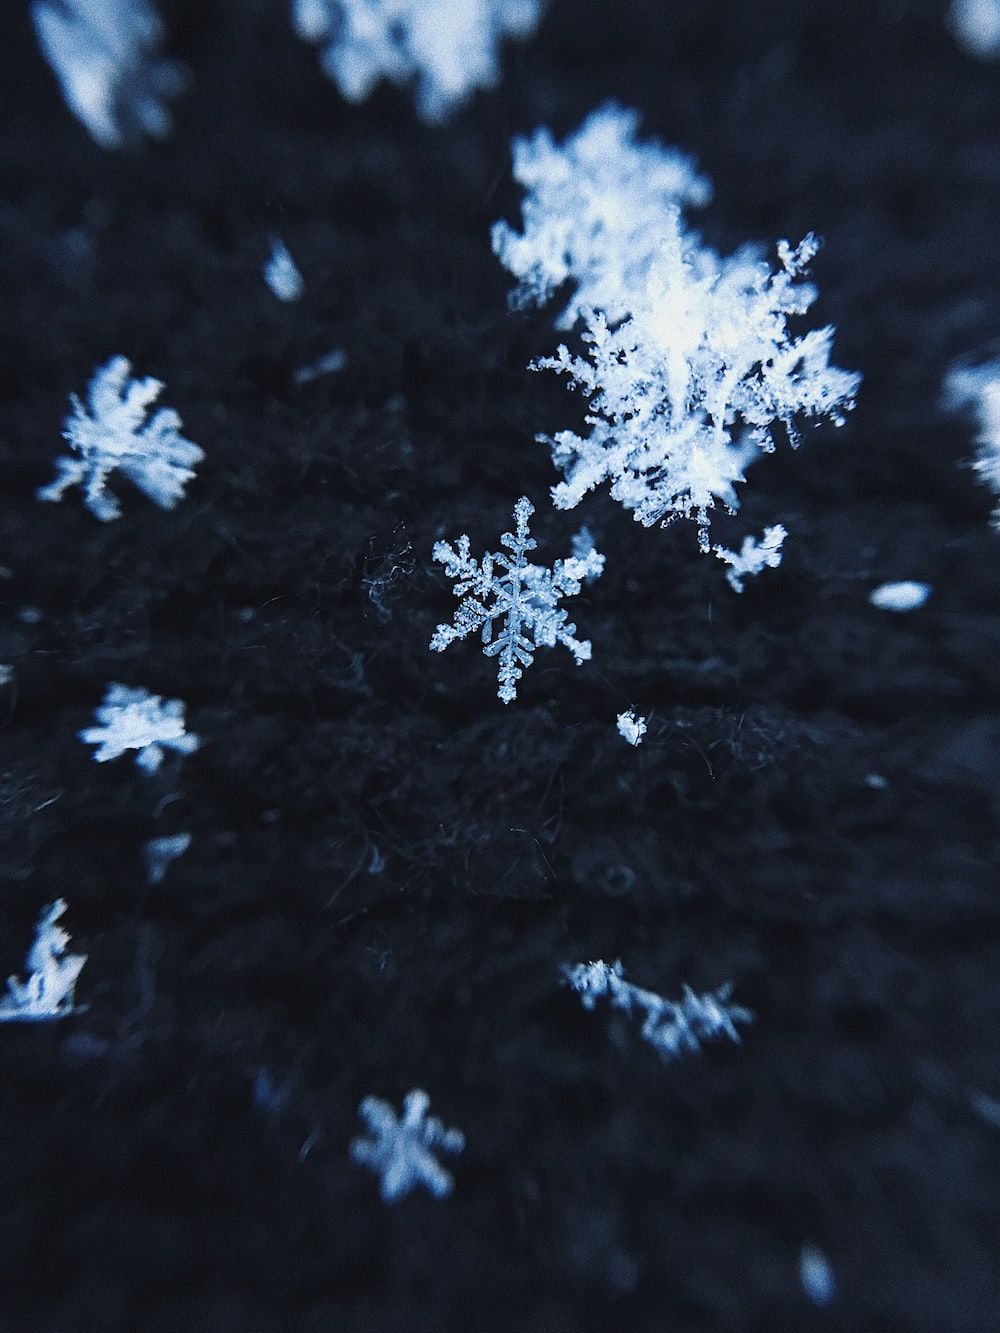 Snowflakes on a black surface - Snowflake